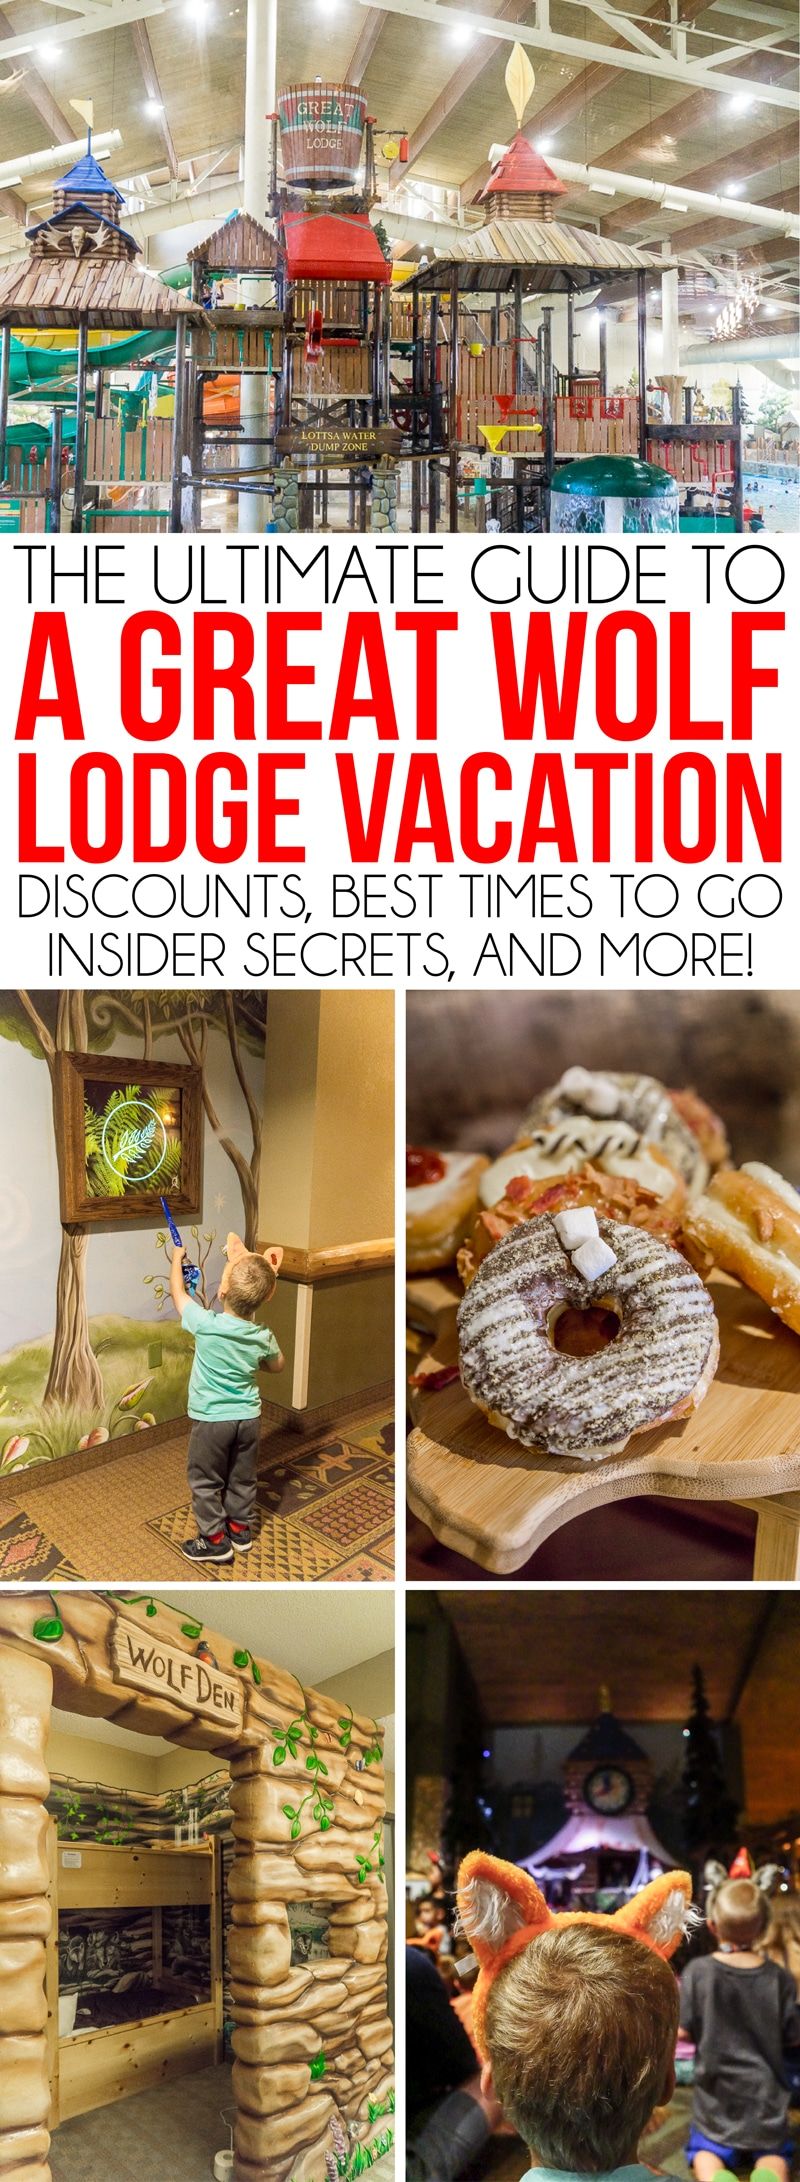 Great Wolf Lodge Grapevine נהדר למשפחות עם ילדים בכל הגילאים